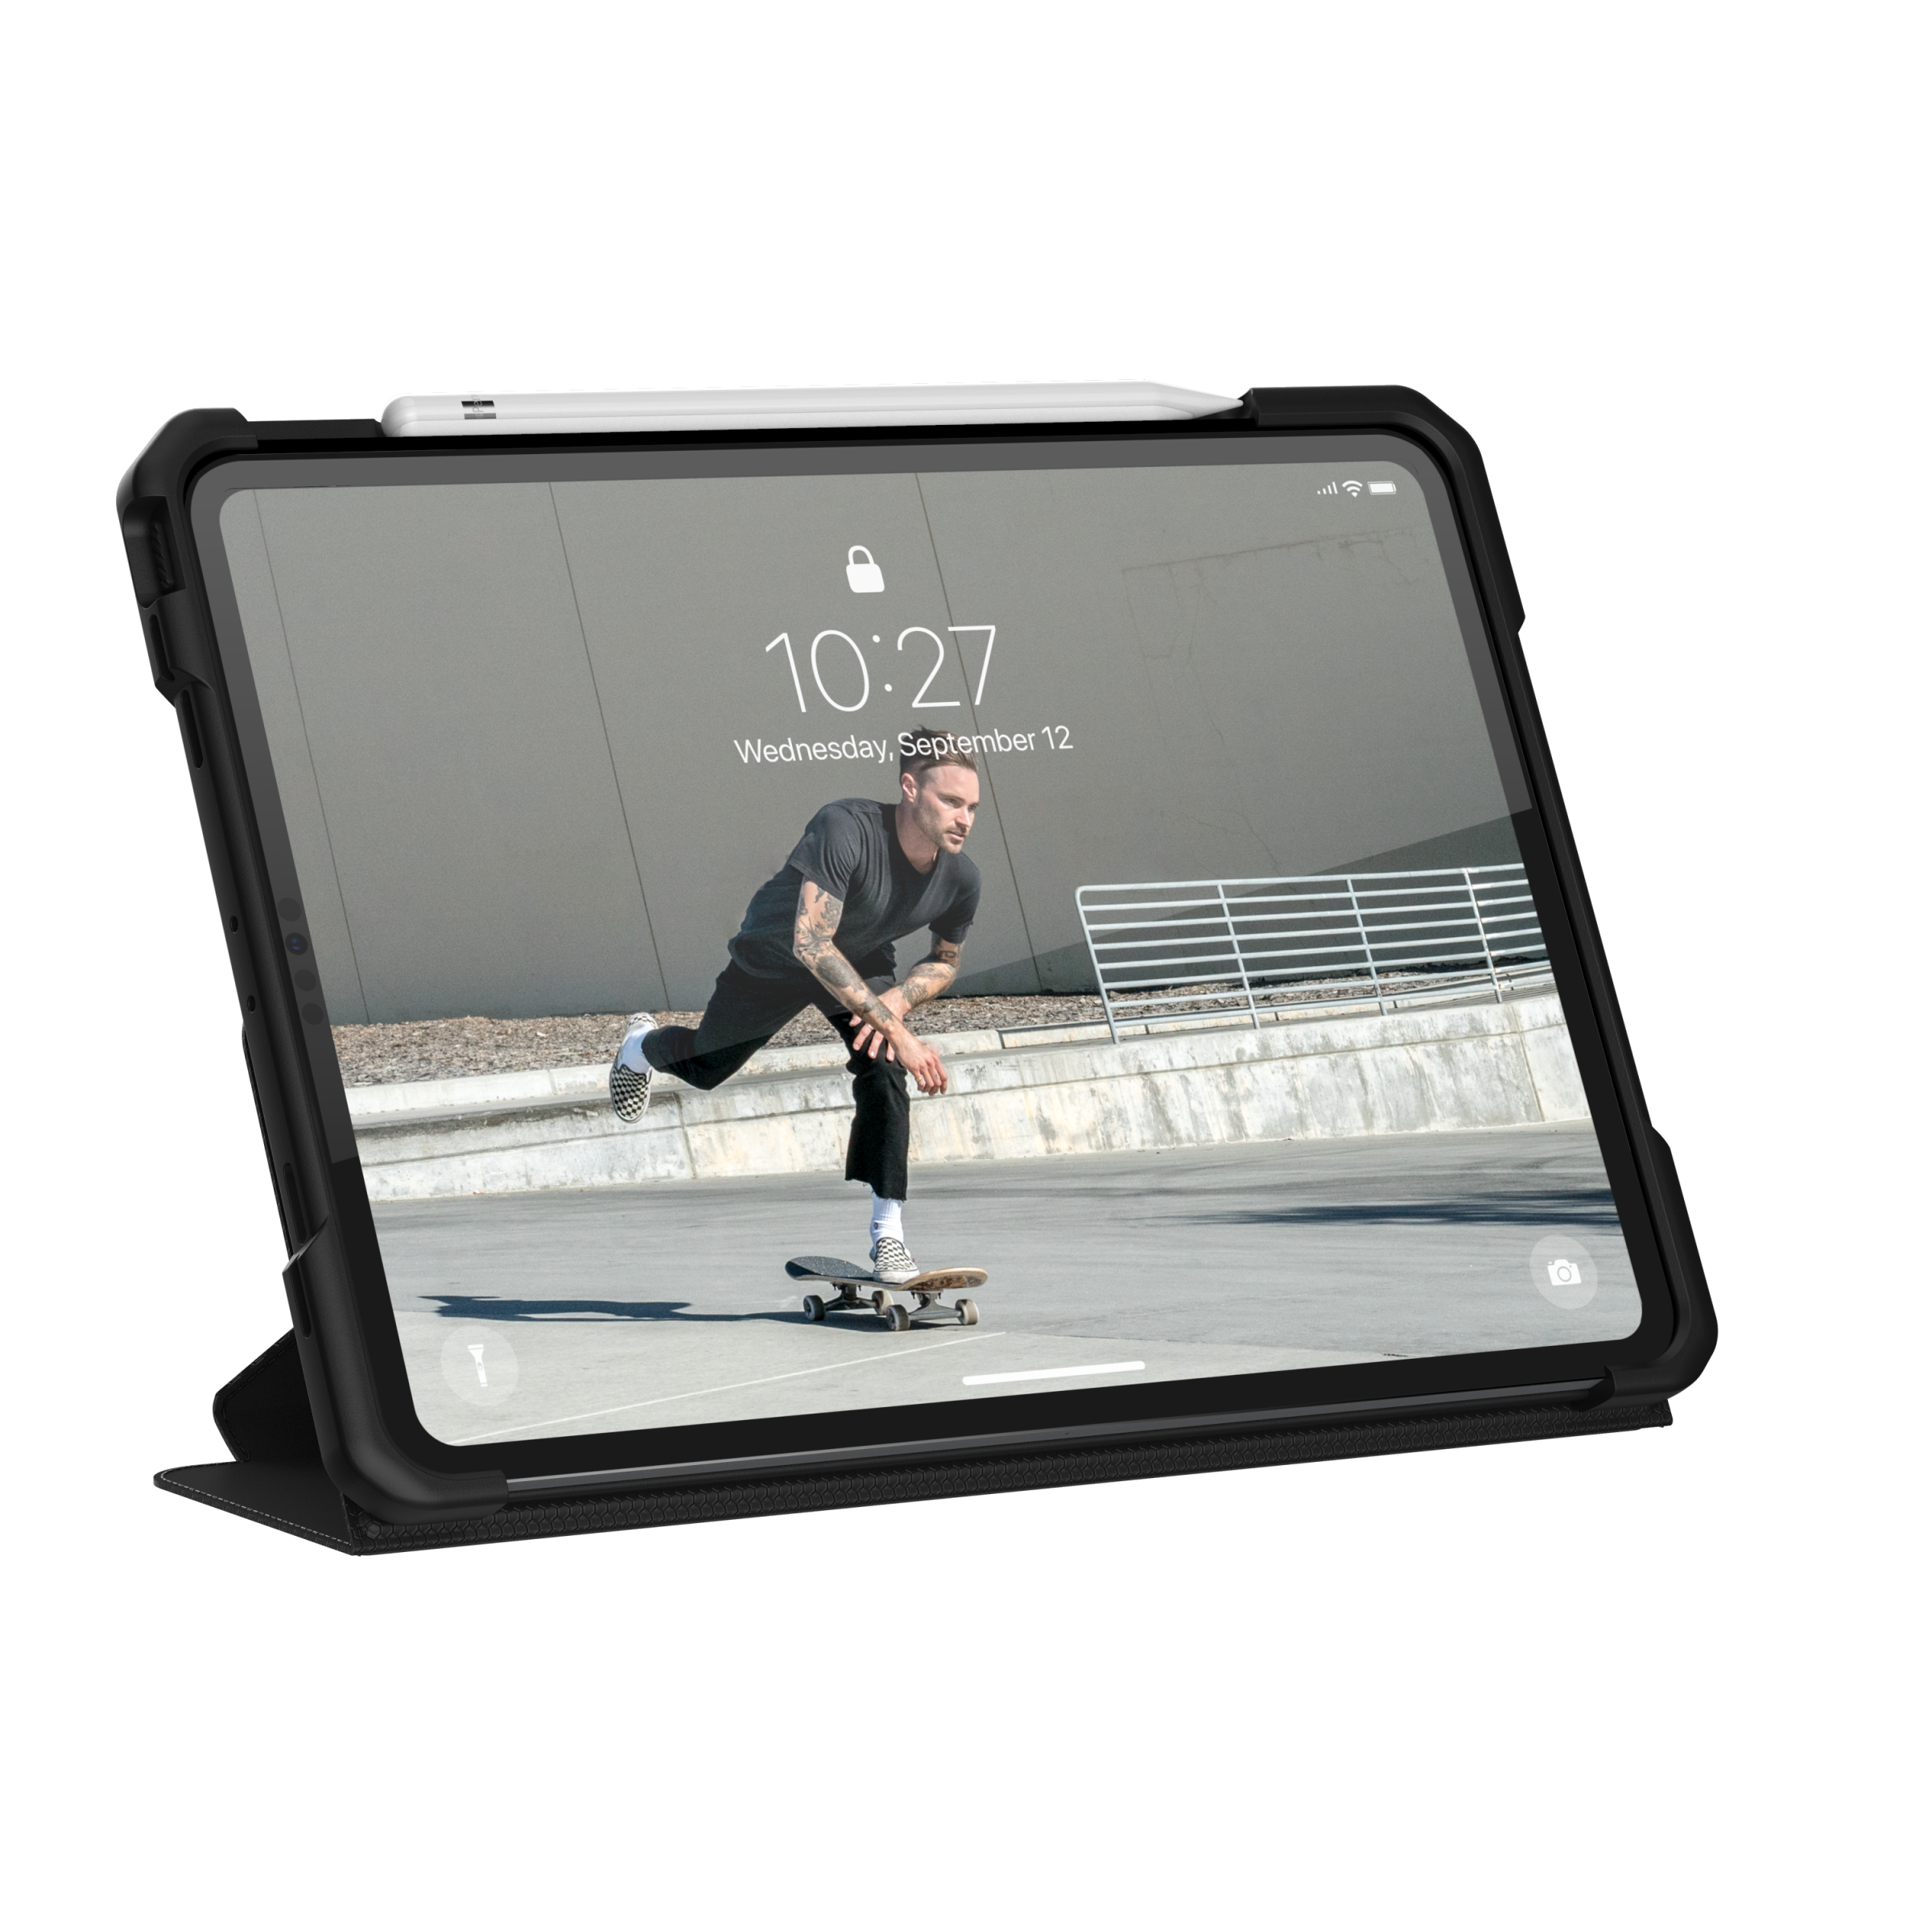 Metropolis Series Case iPad Pro 12.9 2020/2021 Black